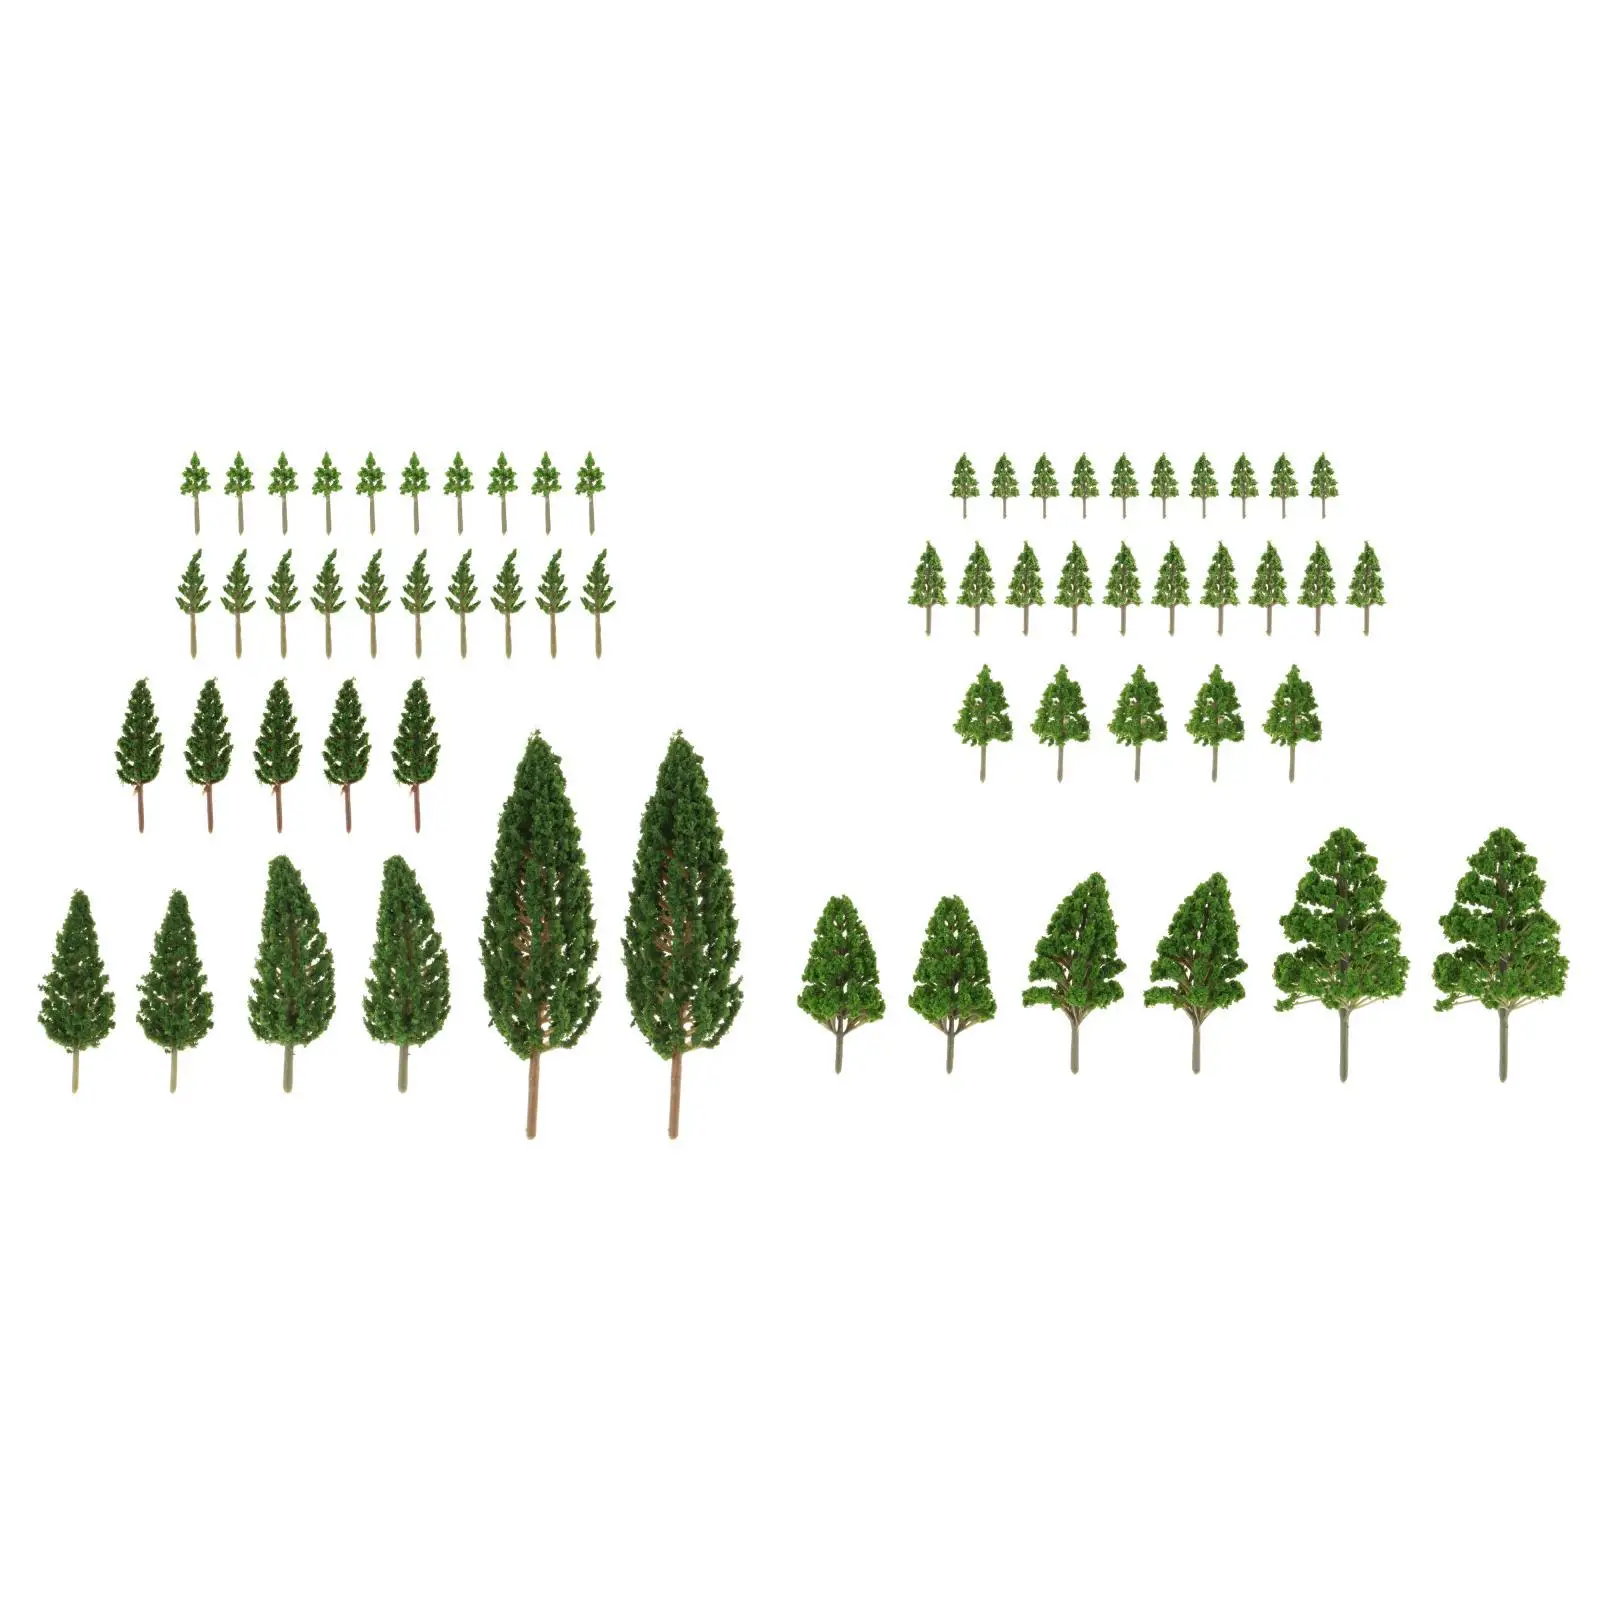 62x Simulation Miniature Tree Train Trees Railroad Scenery Railroad Green Scenery Tree for Building Model DIY Scenery Landscape